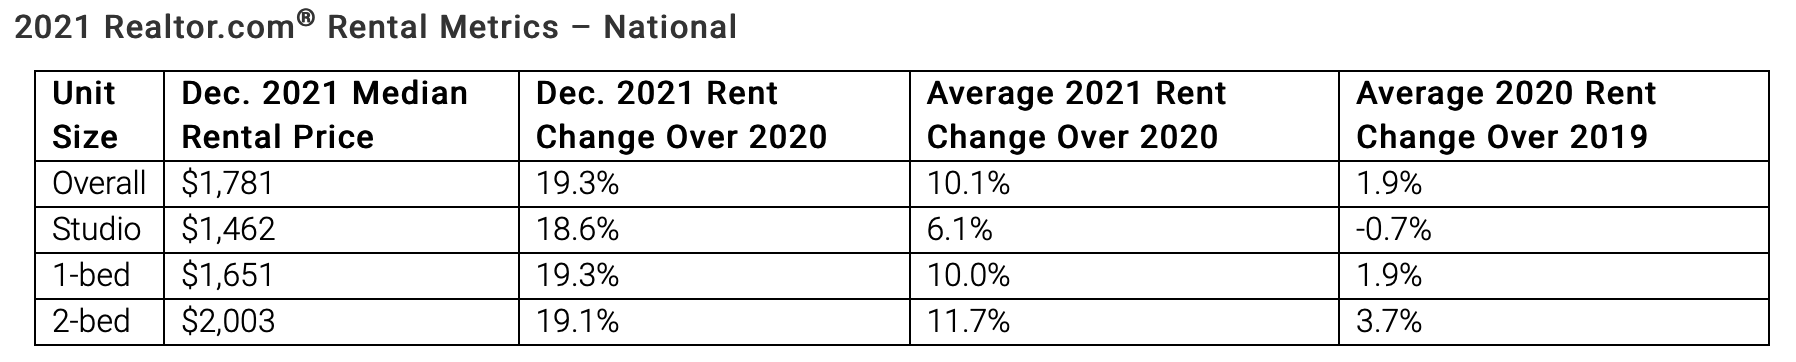 A table showing realtor.com®'s 2021 national rent metrics